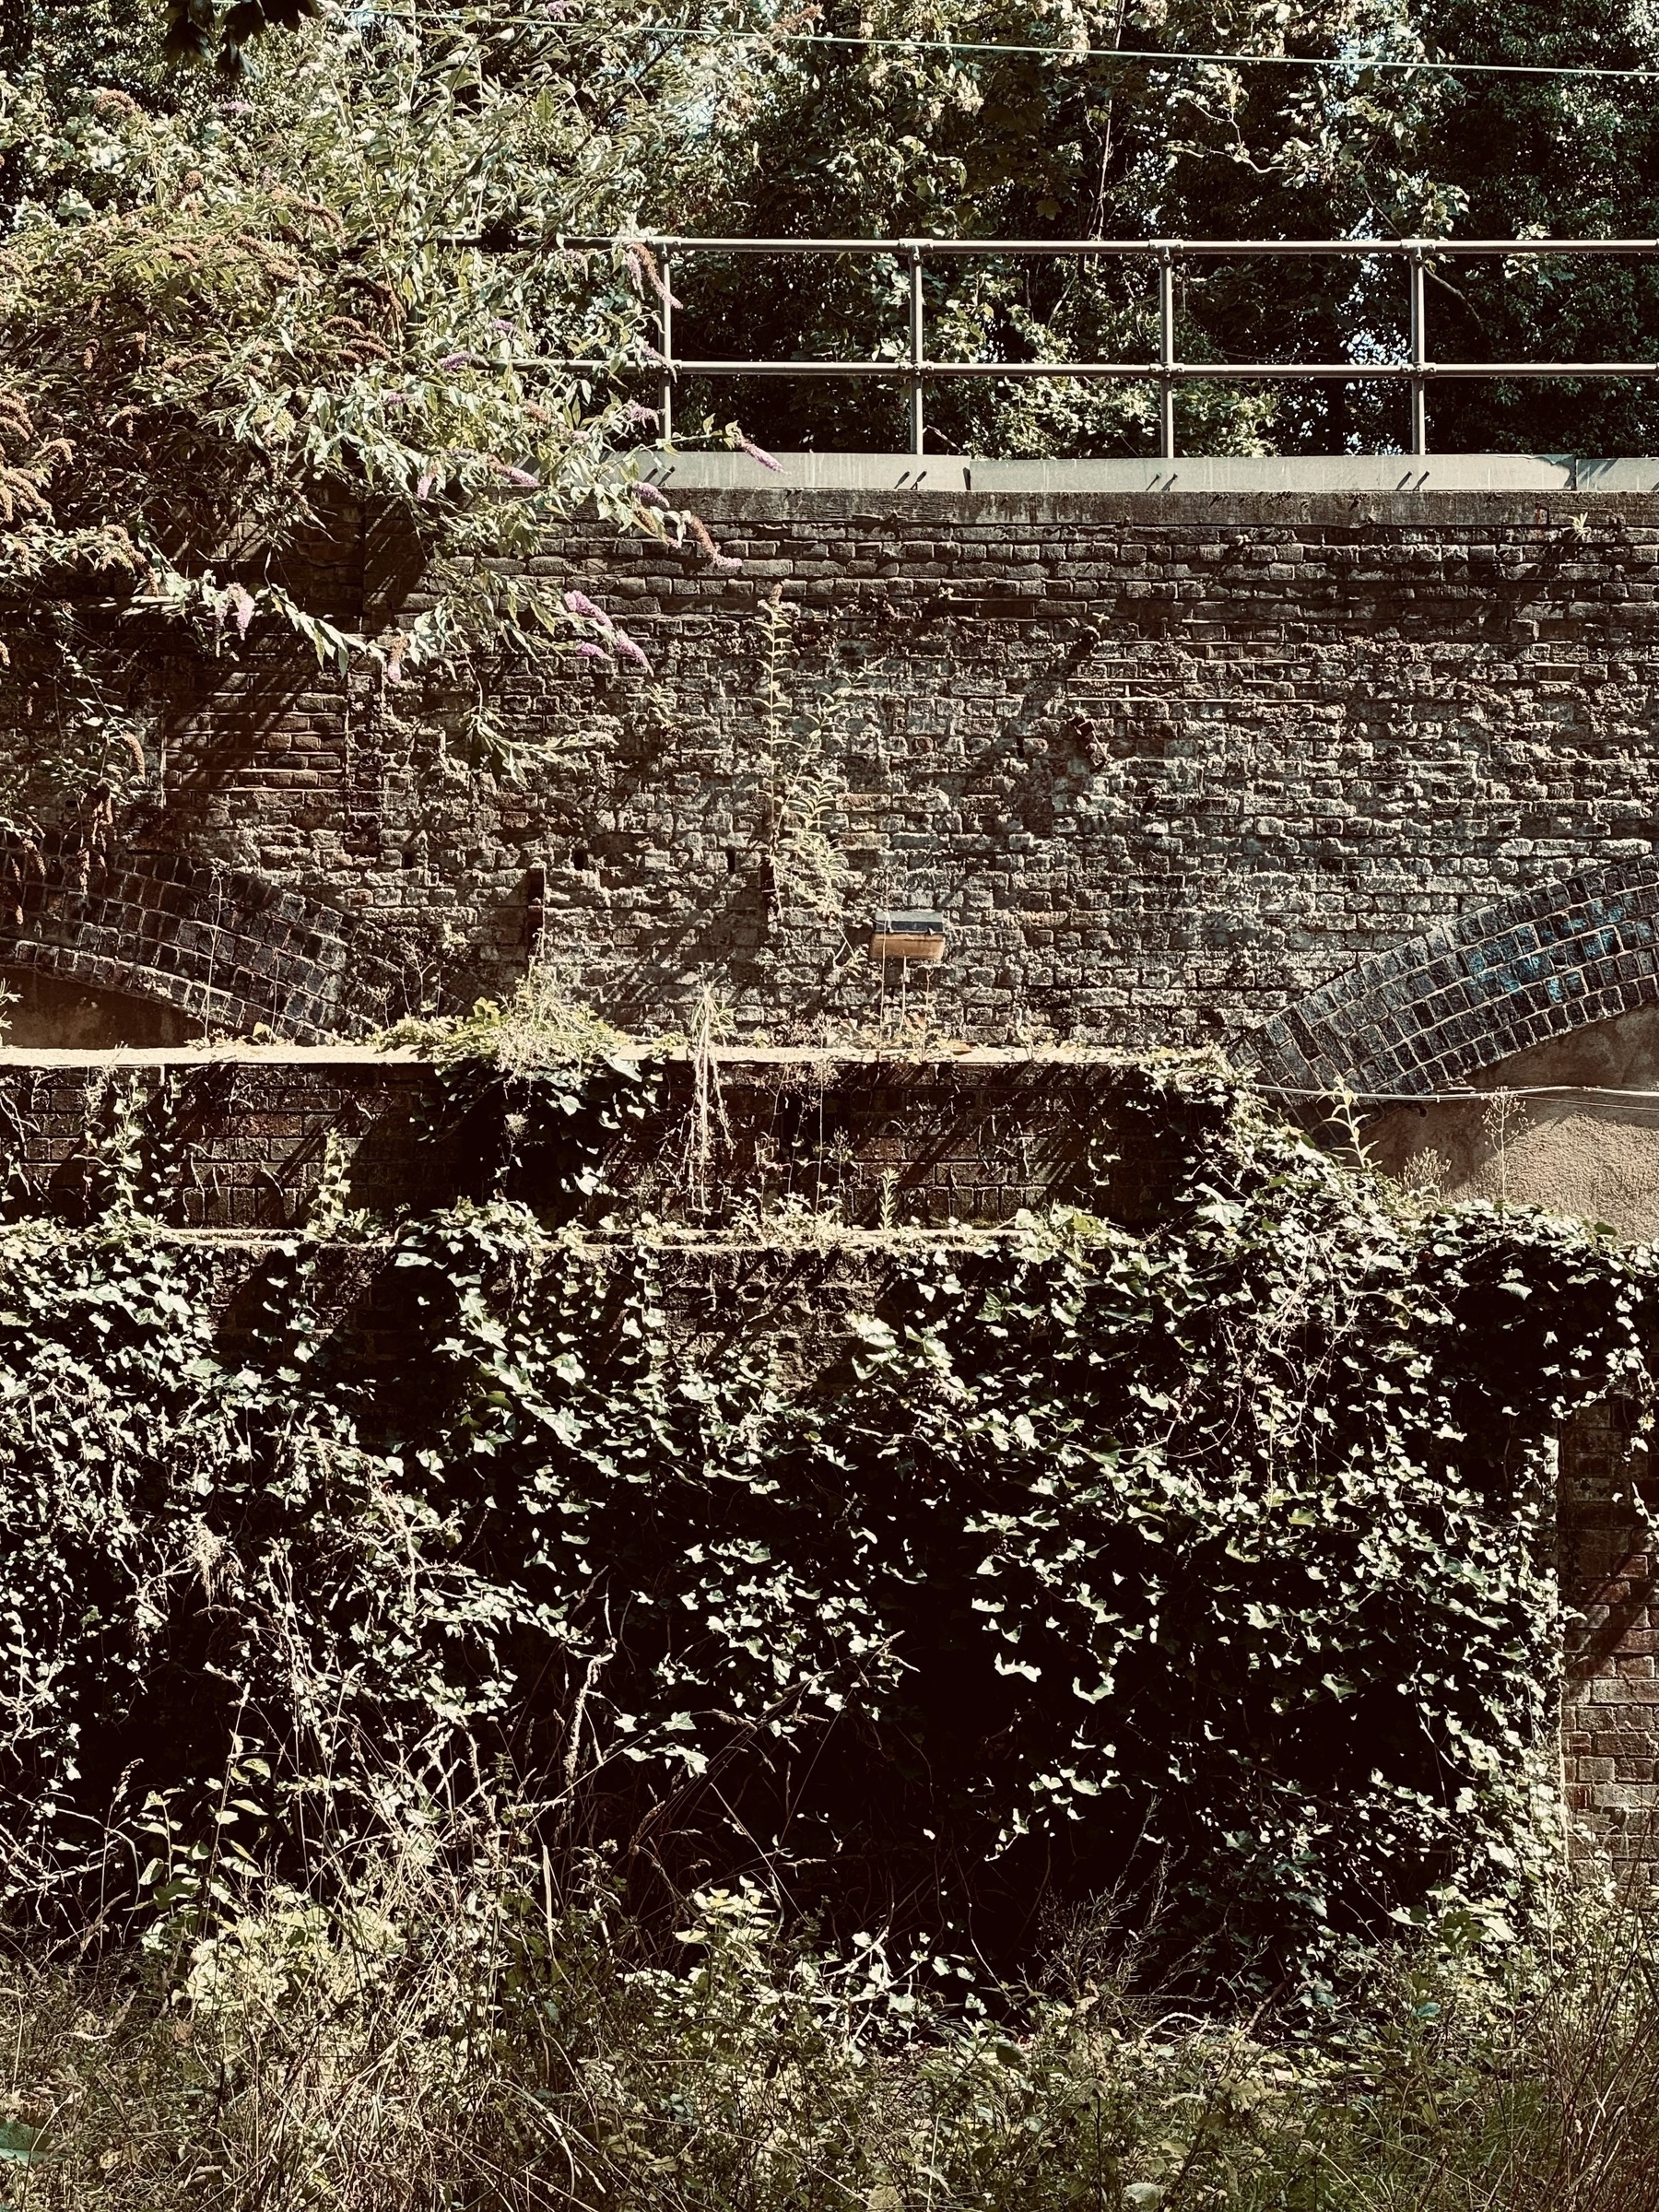 Overgrown brickwork of a railway viaduct.